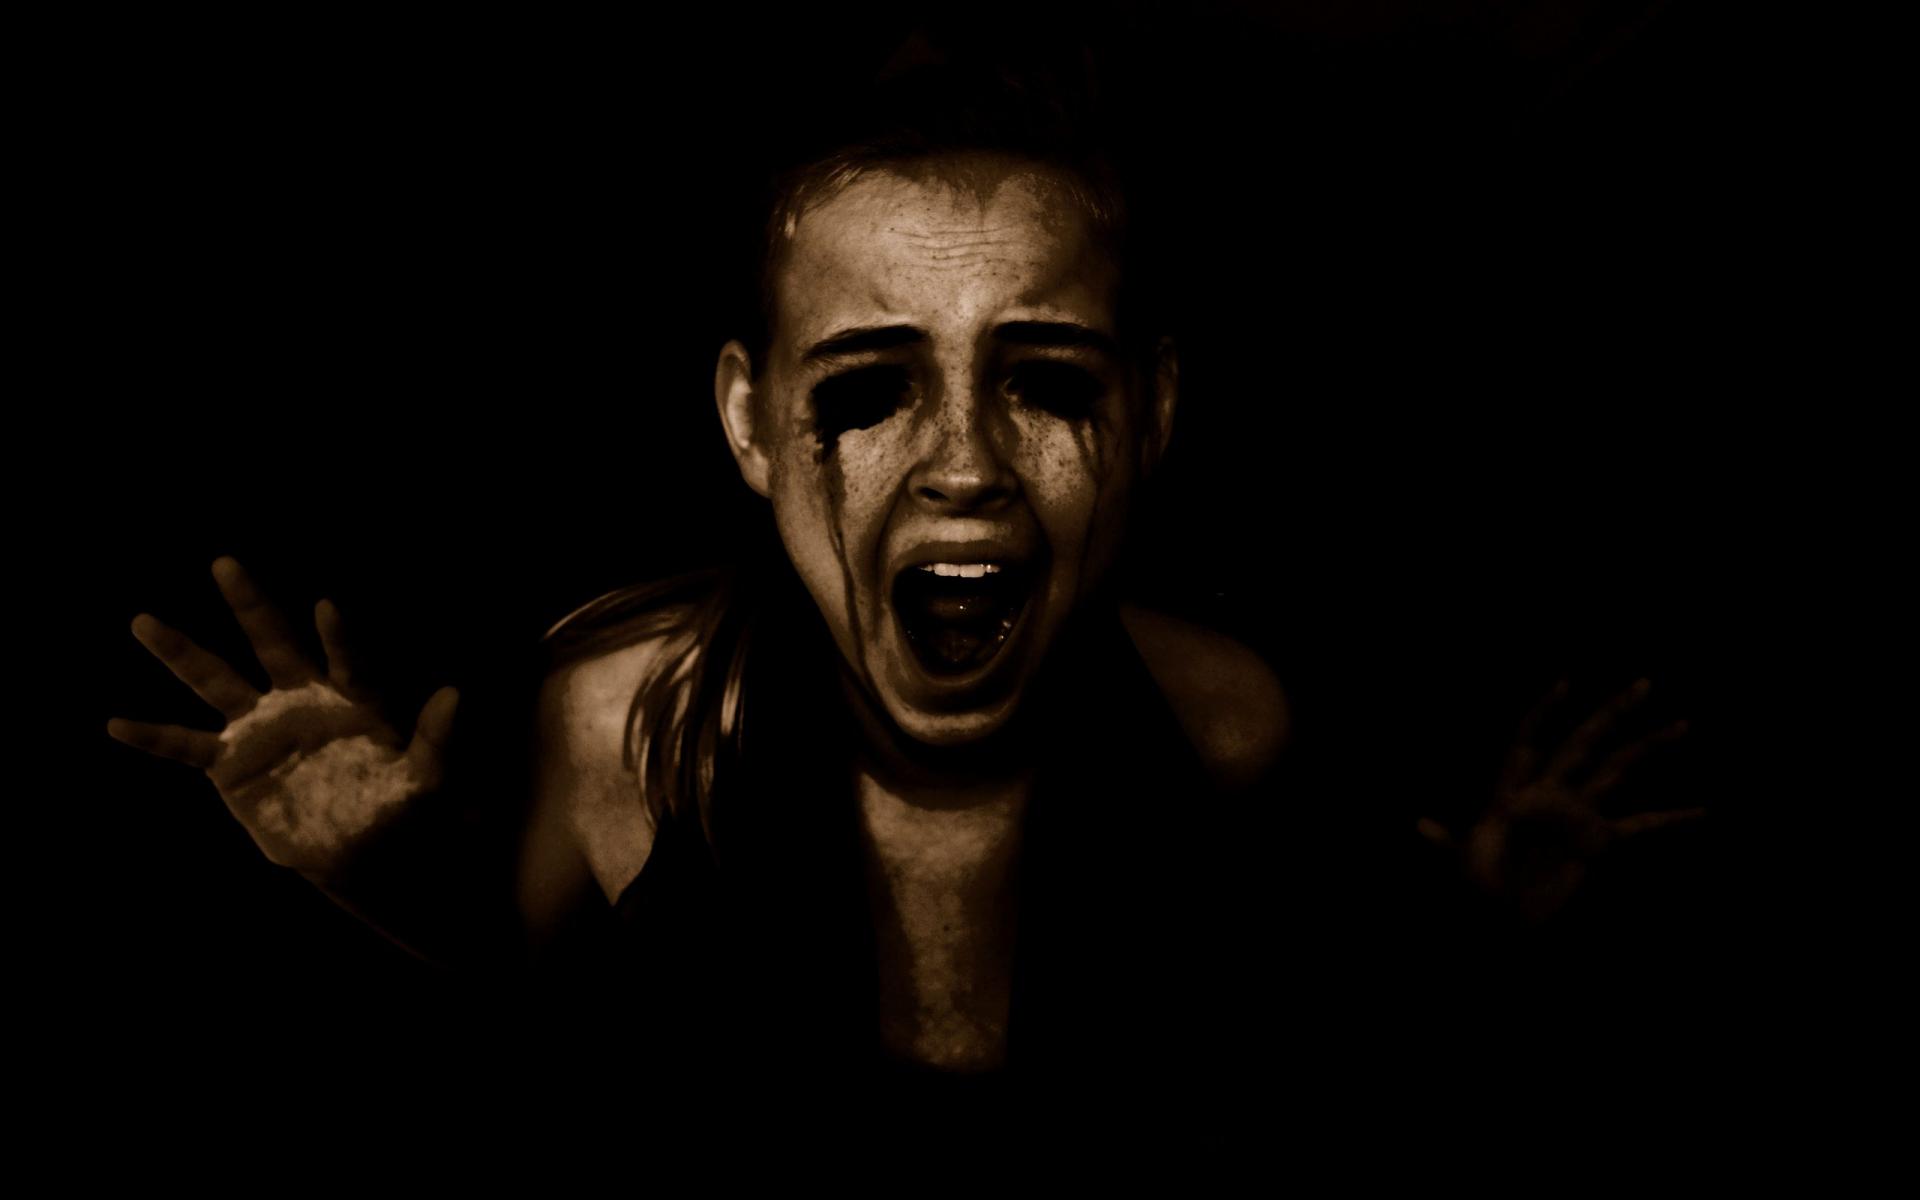 Wallpaper, 1920x1200 px, blood, creepy, dark, demons, emotion, evil, face, girls, Halloween, horror, macabre, mood, scary, Scream, spooky, women 1920x1200